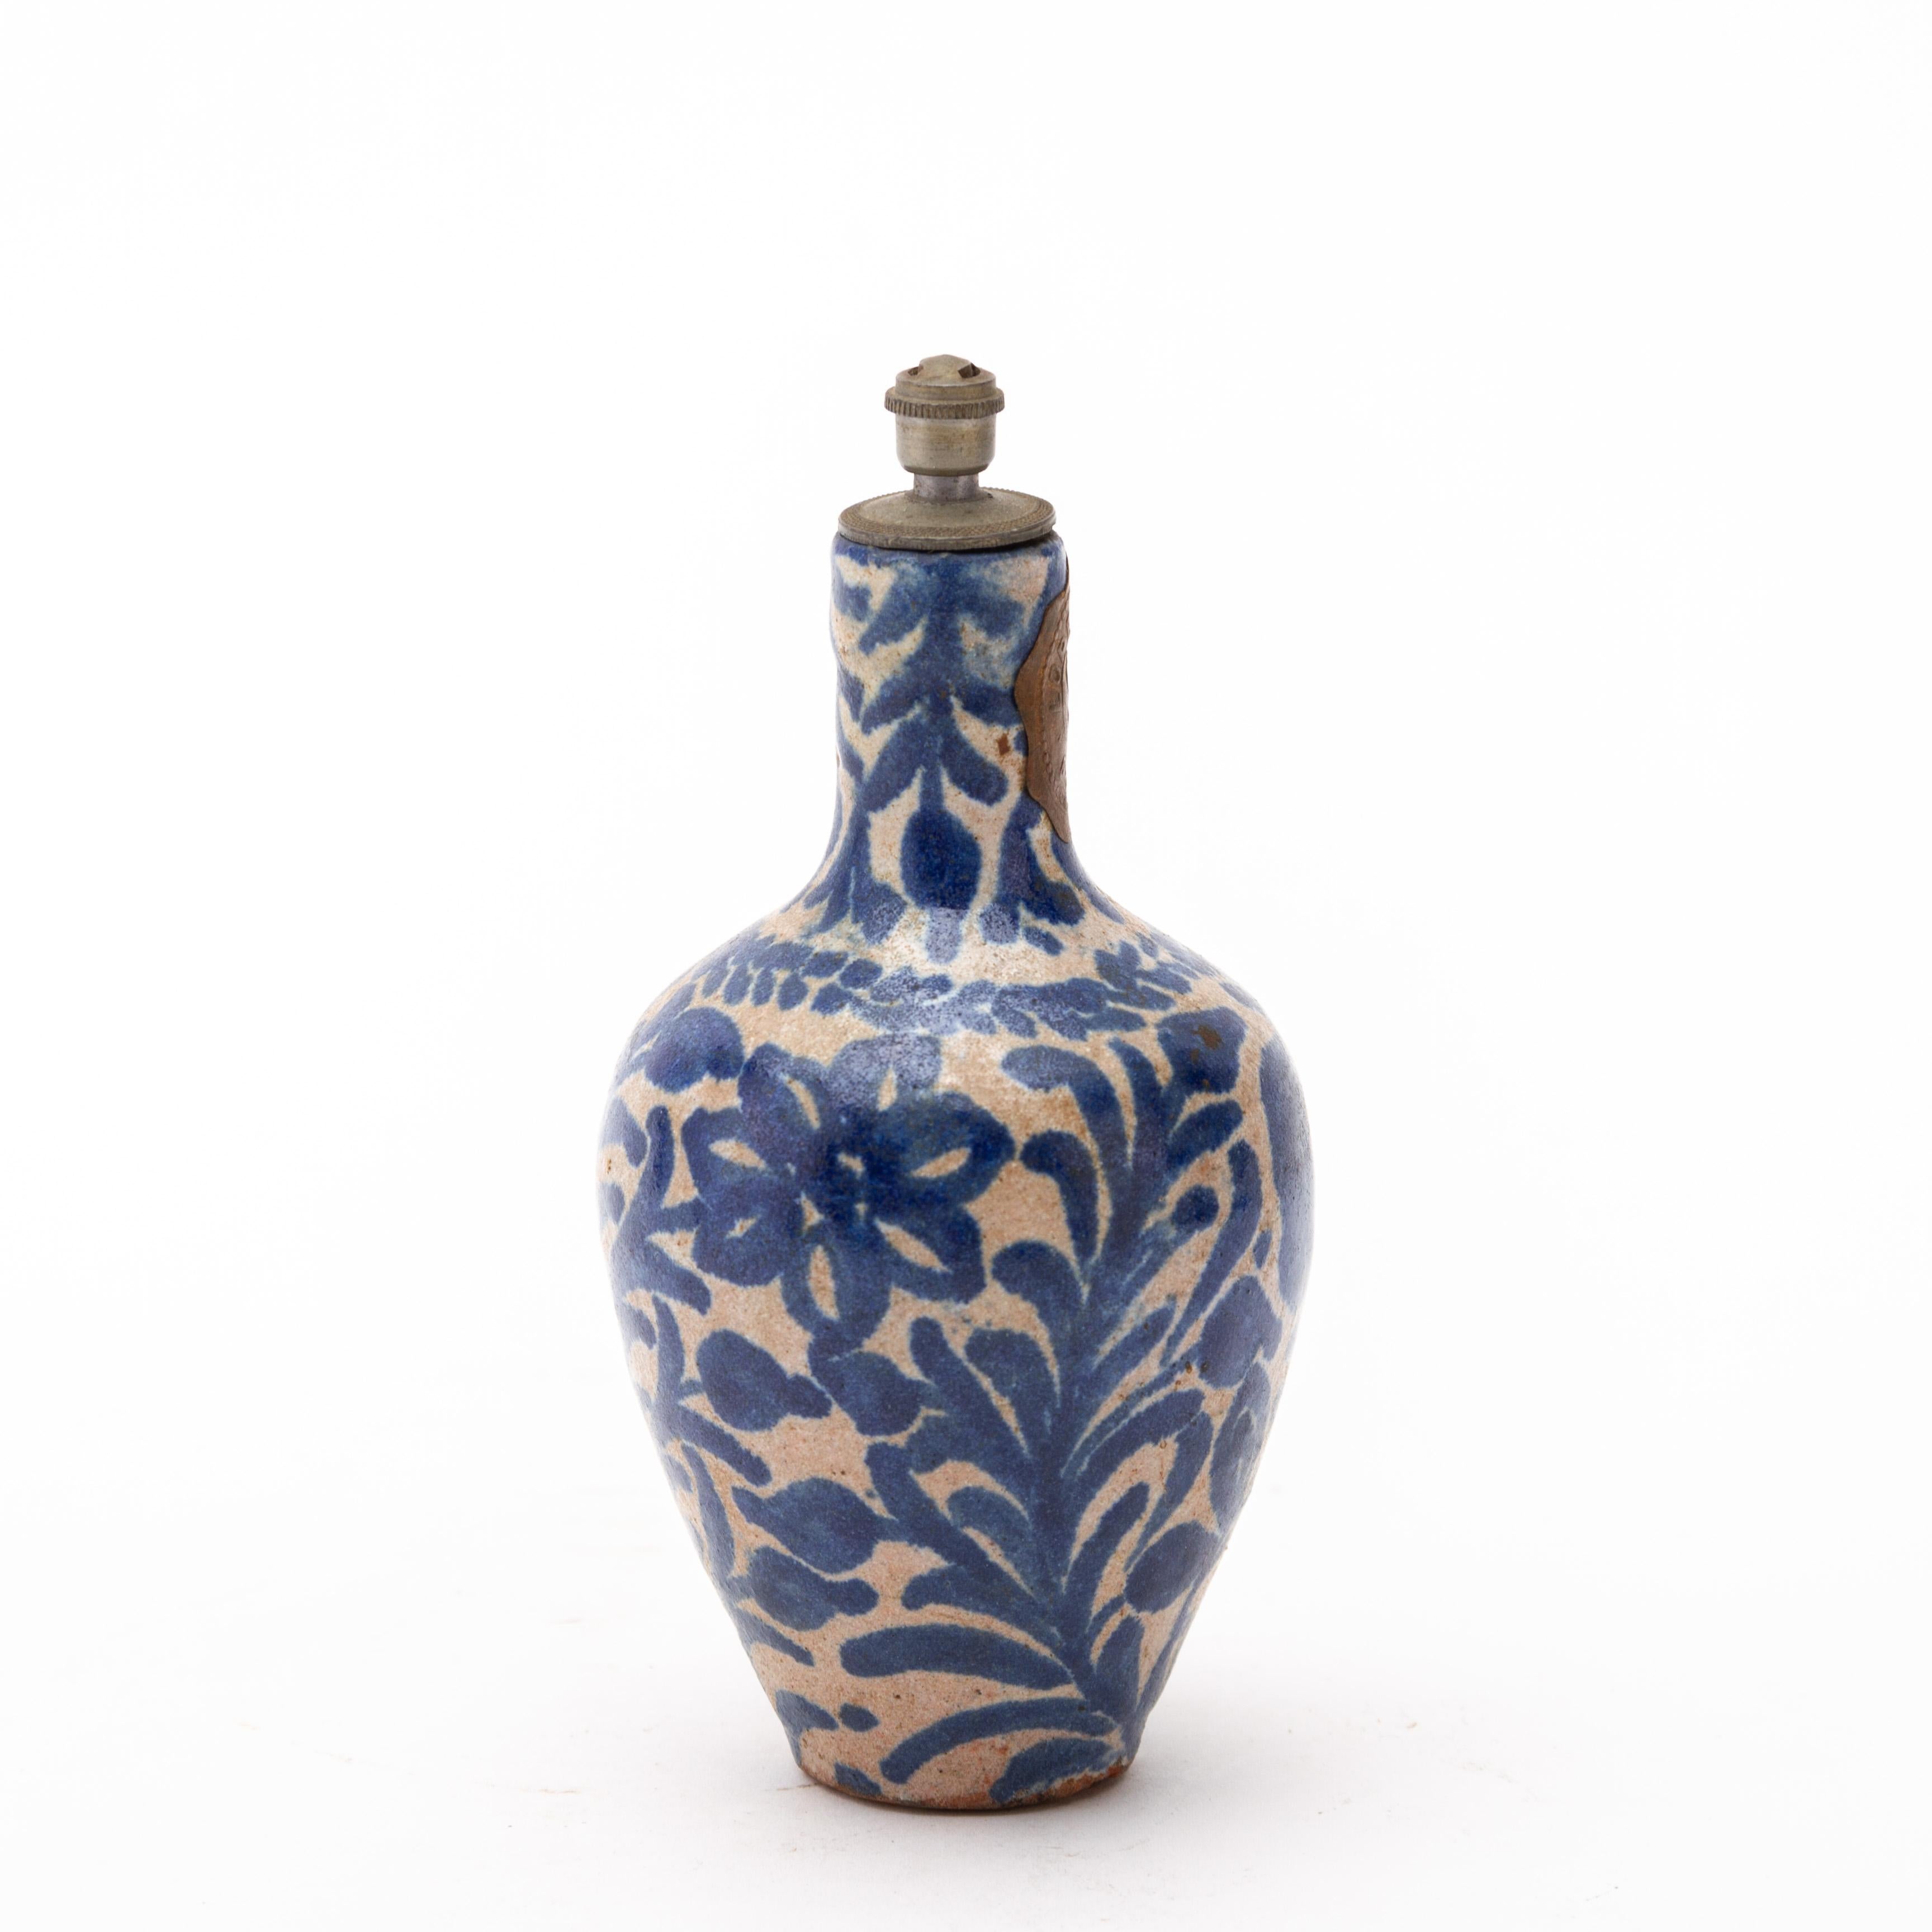 Blue & White Ceramic Vase
Good condition
Free international shipping.